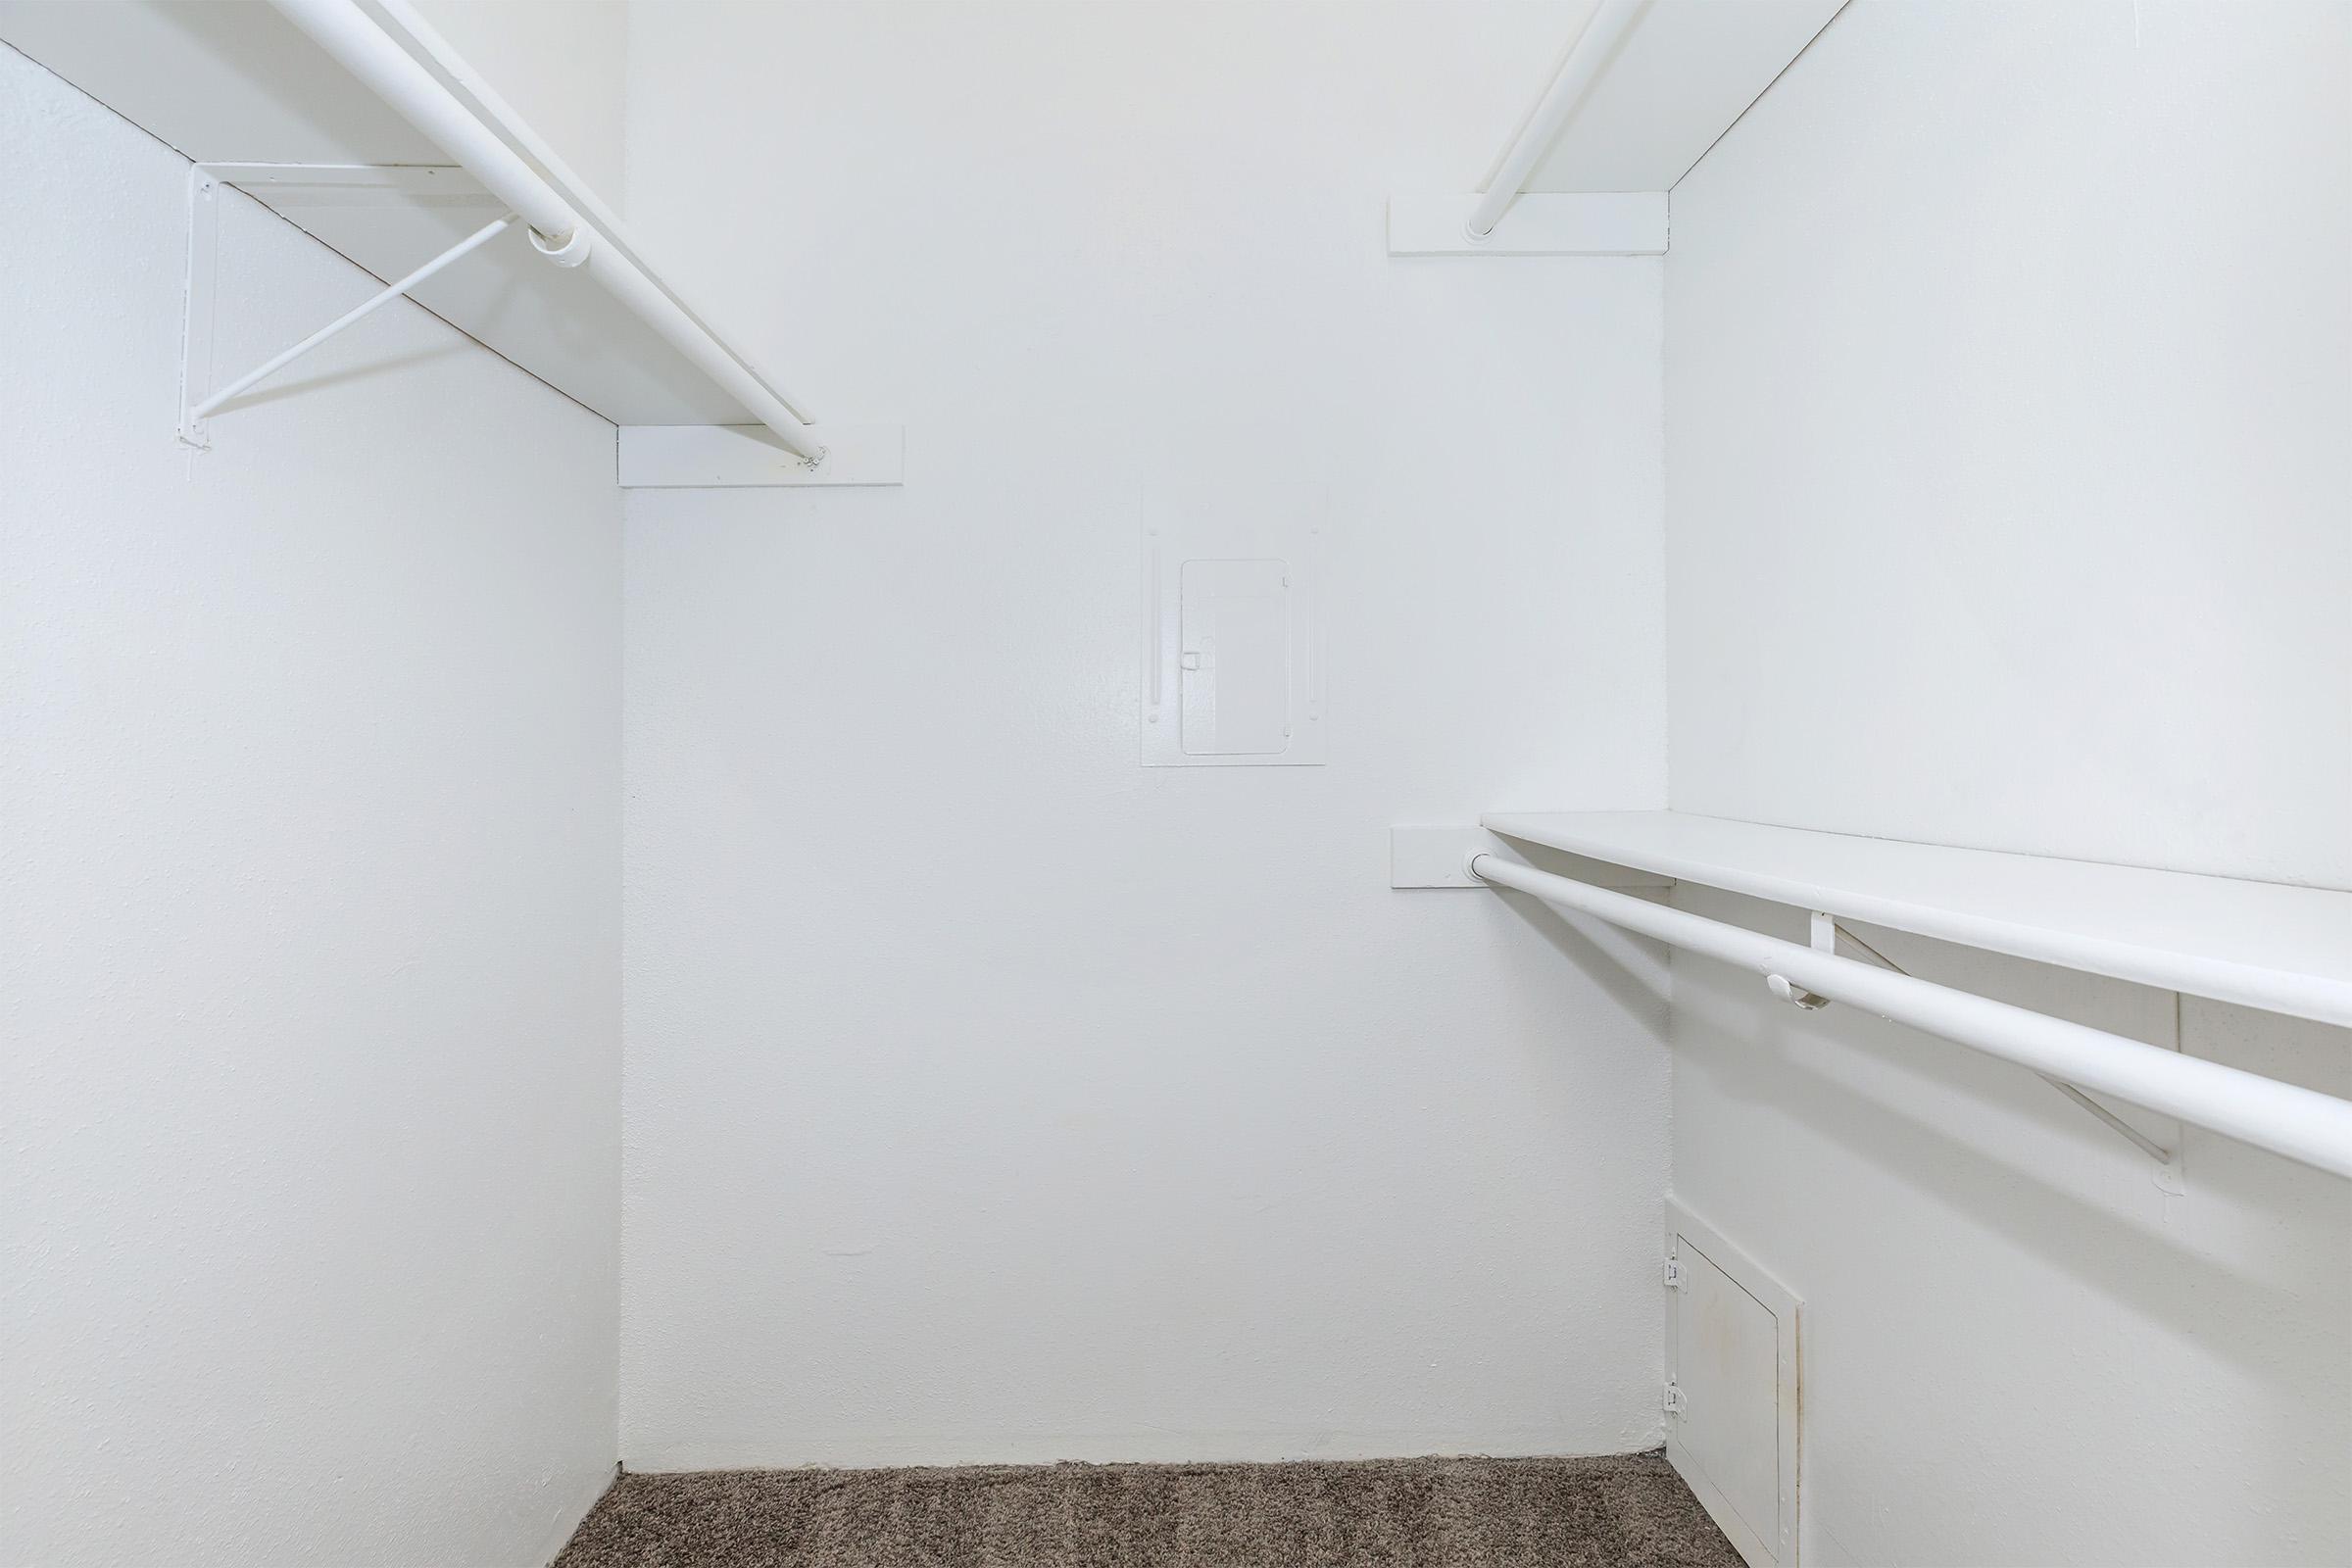 a white refrigerator freezer sitting next to a sink